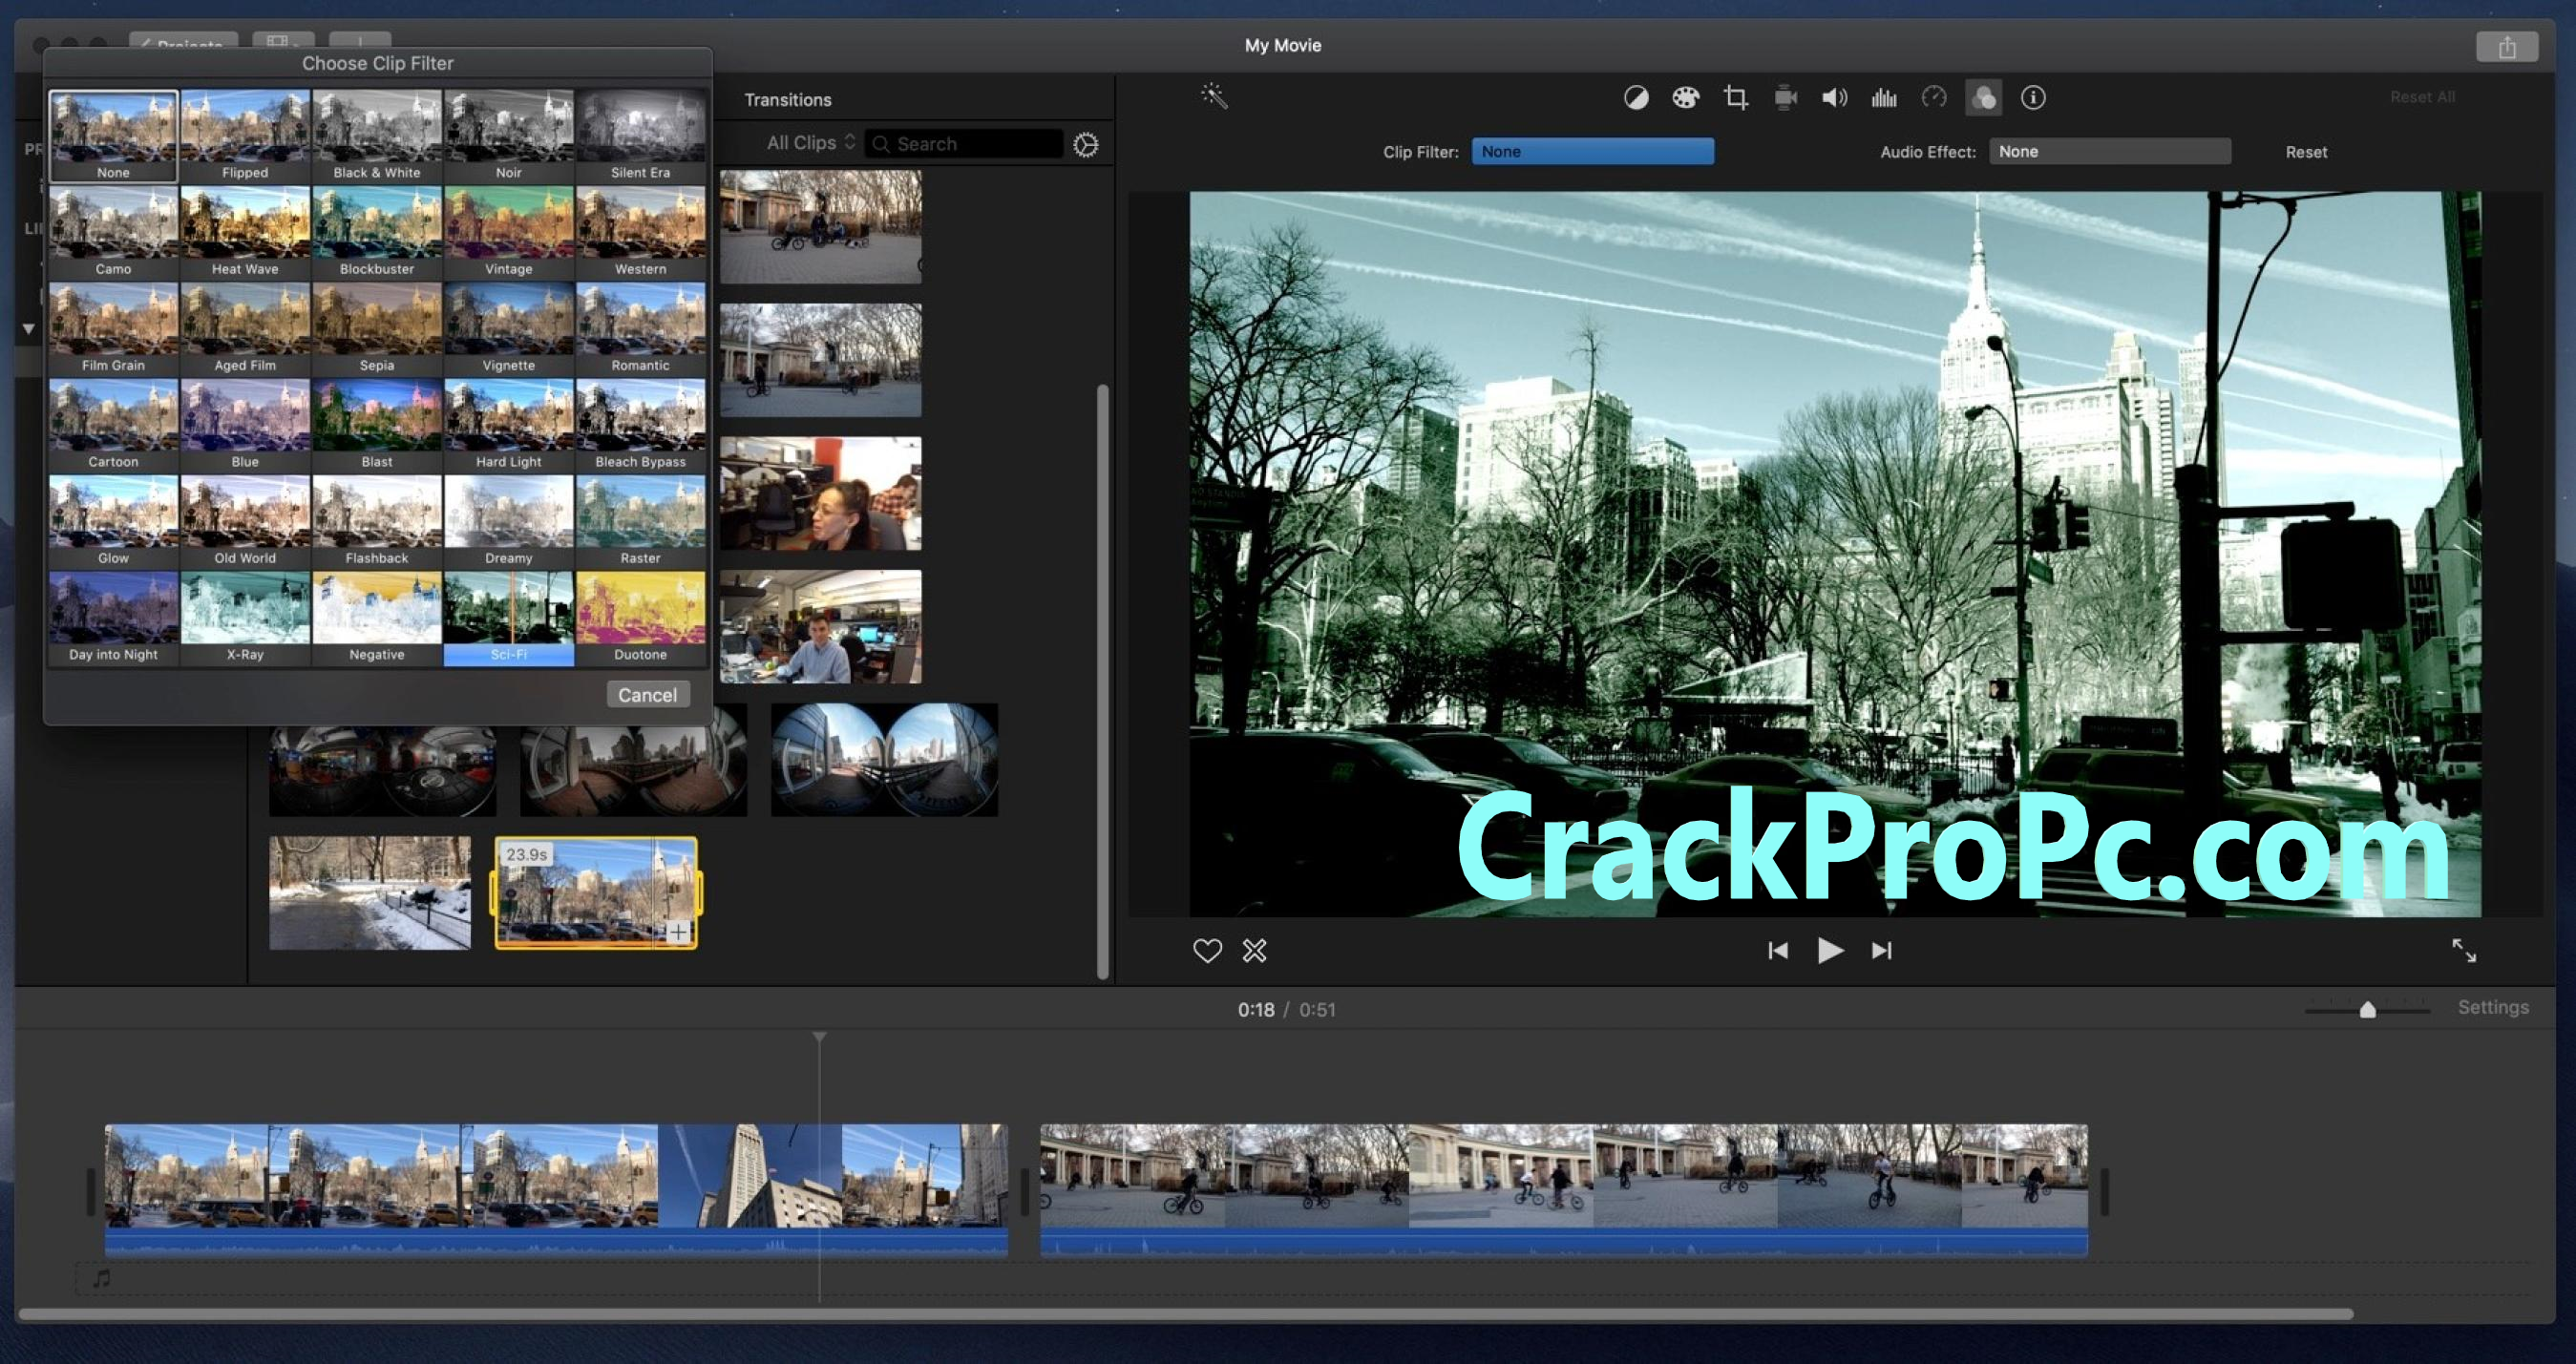 iMovie 10.3.2 Crack Win + Mac Full Latest Version Free Download 2022